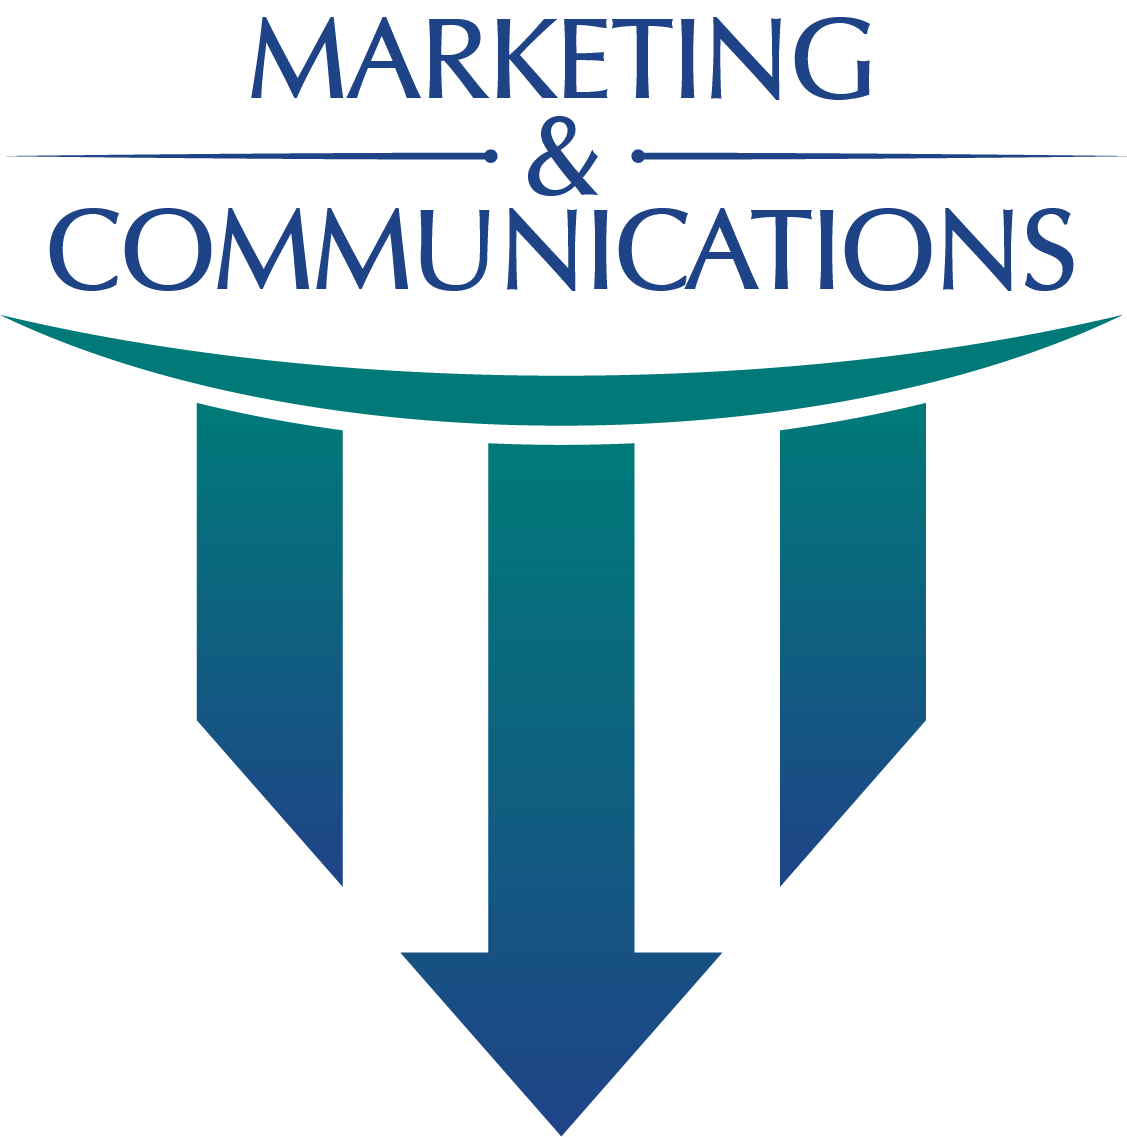 Marketing & Communications